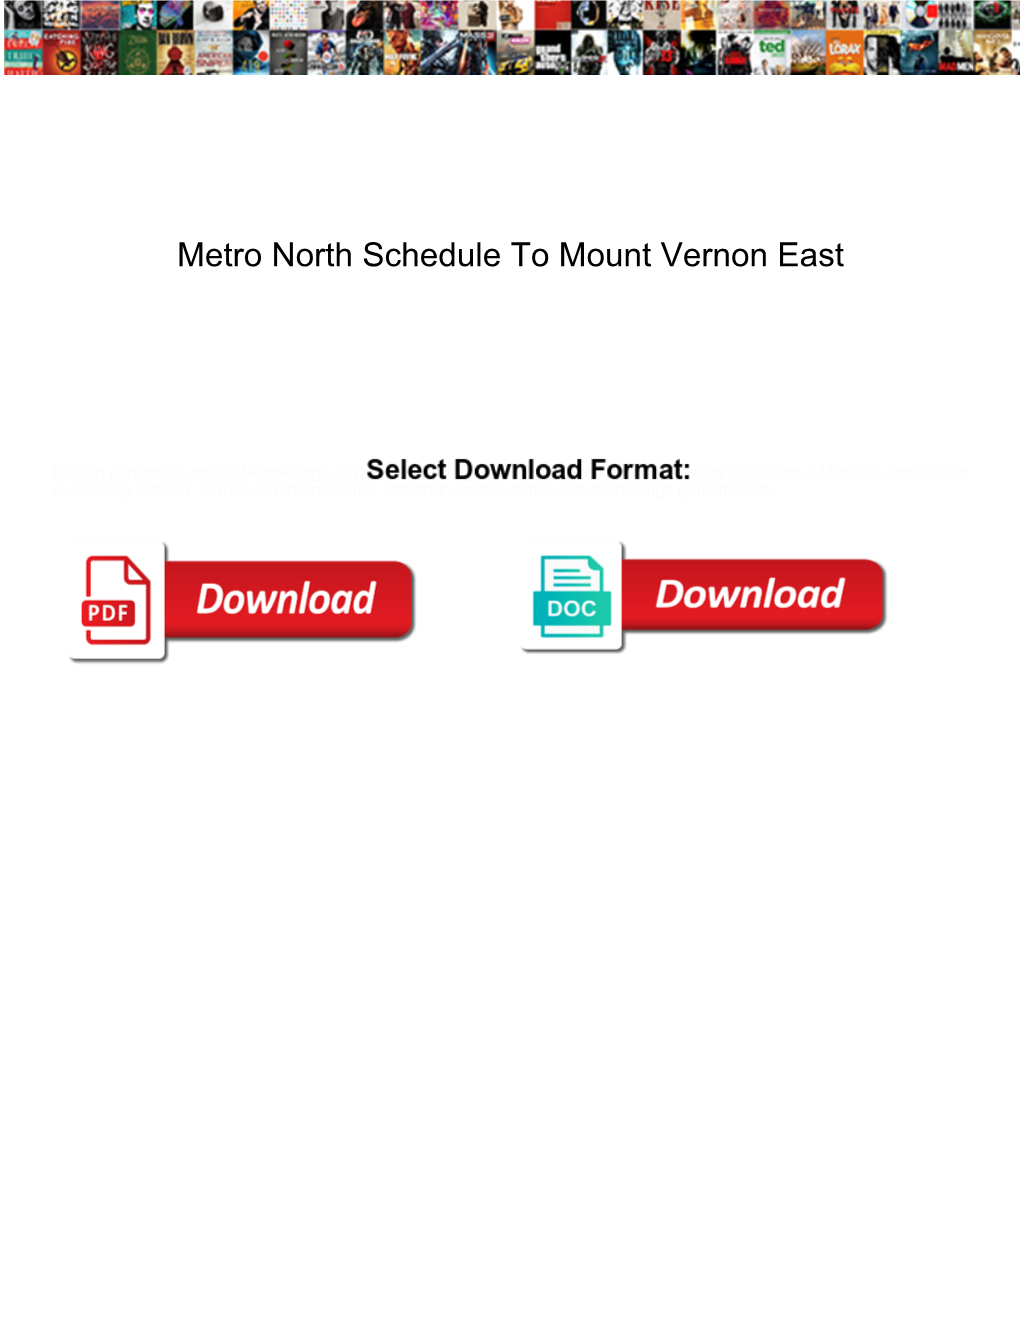 Metro North Schedule to Mount Vernon East